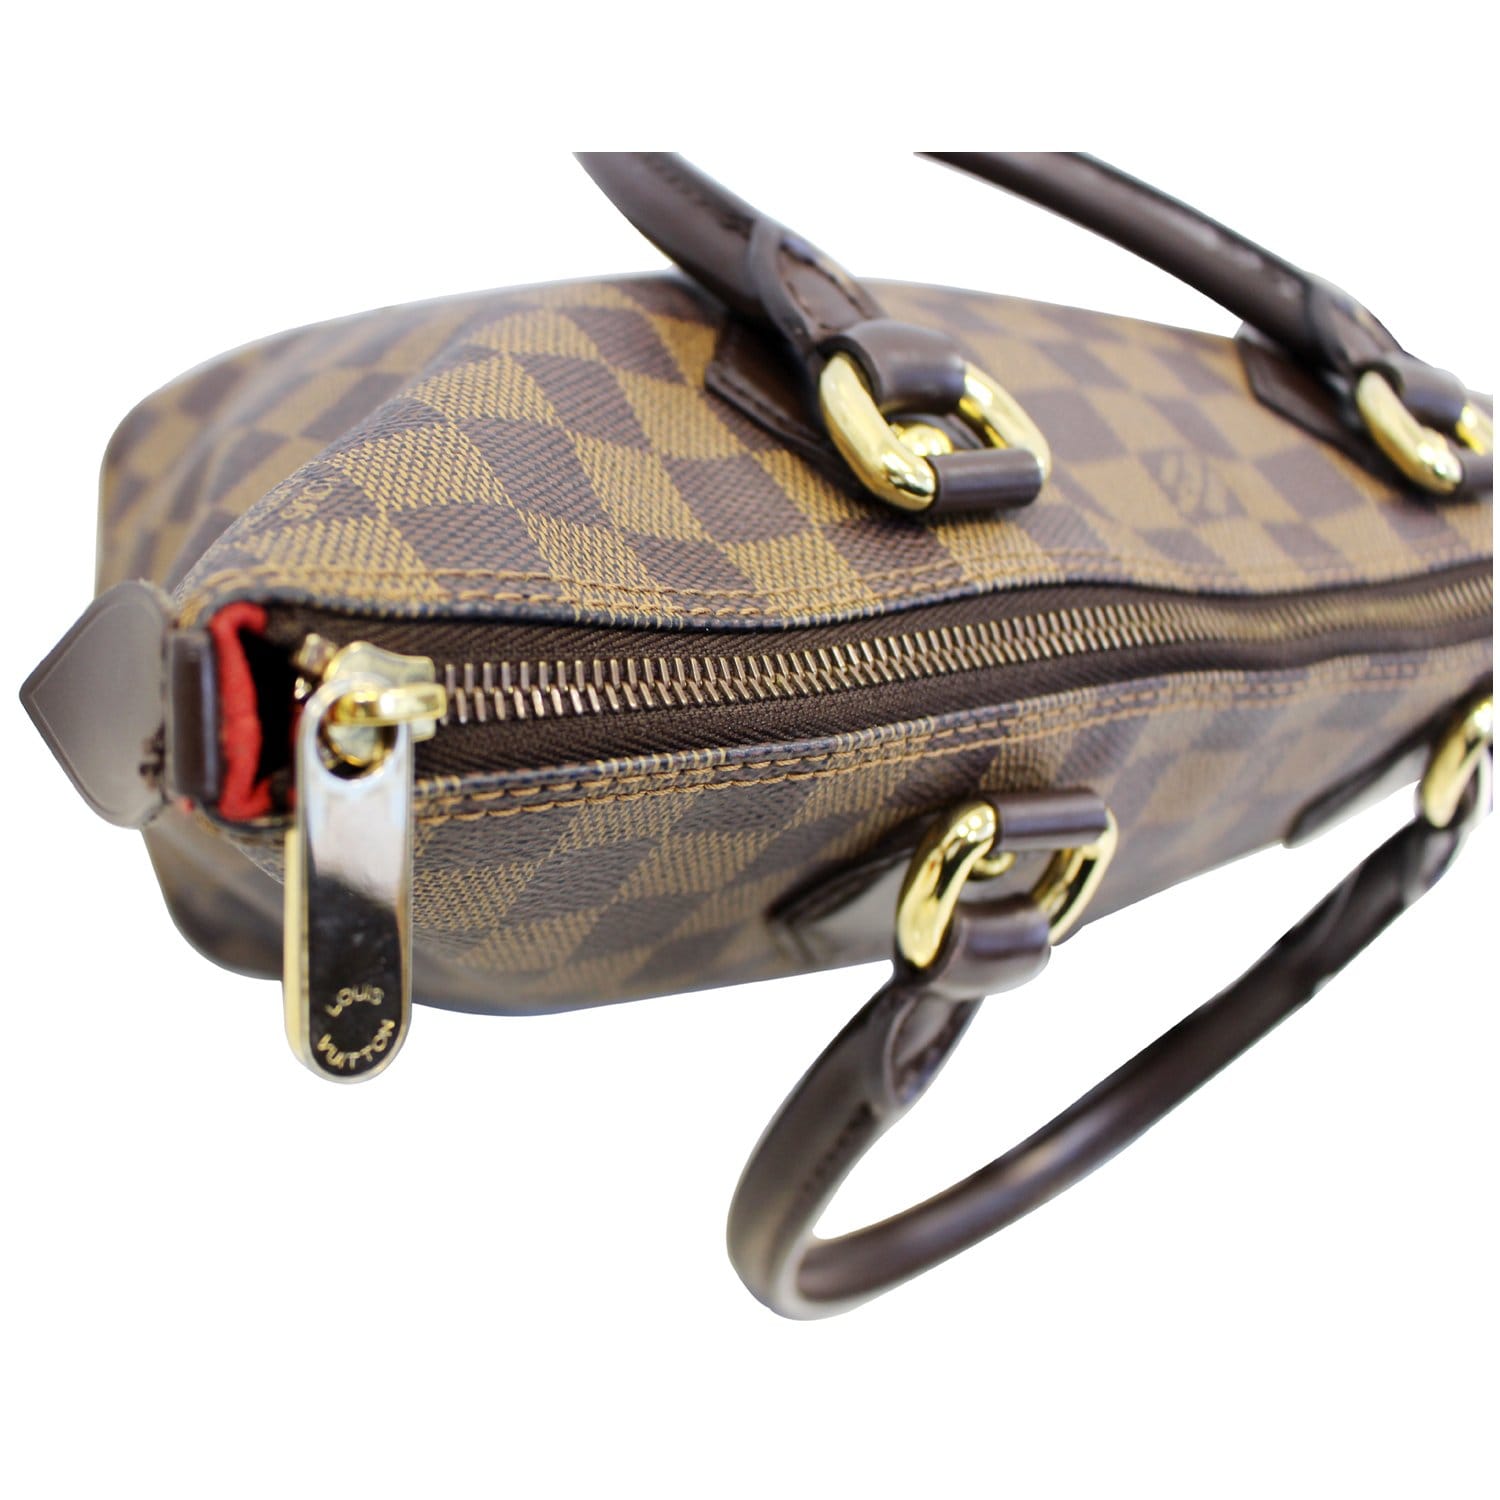 Saleya PM Damier Ebene – Keeks Designer Handbags